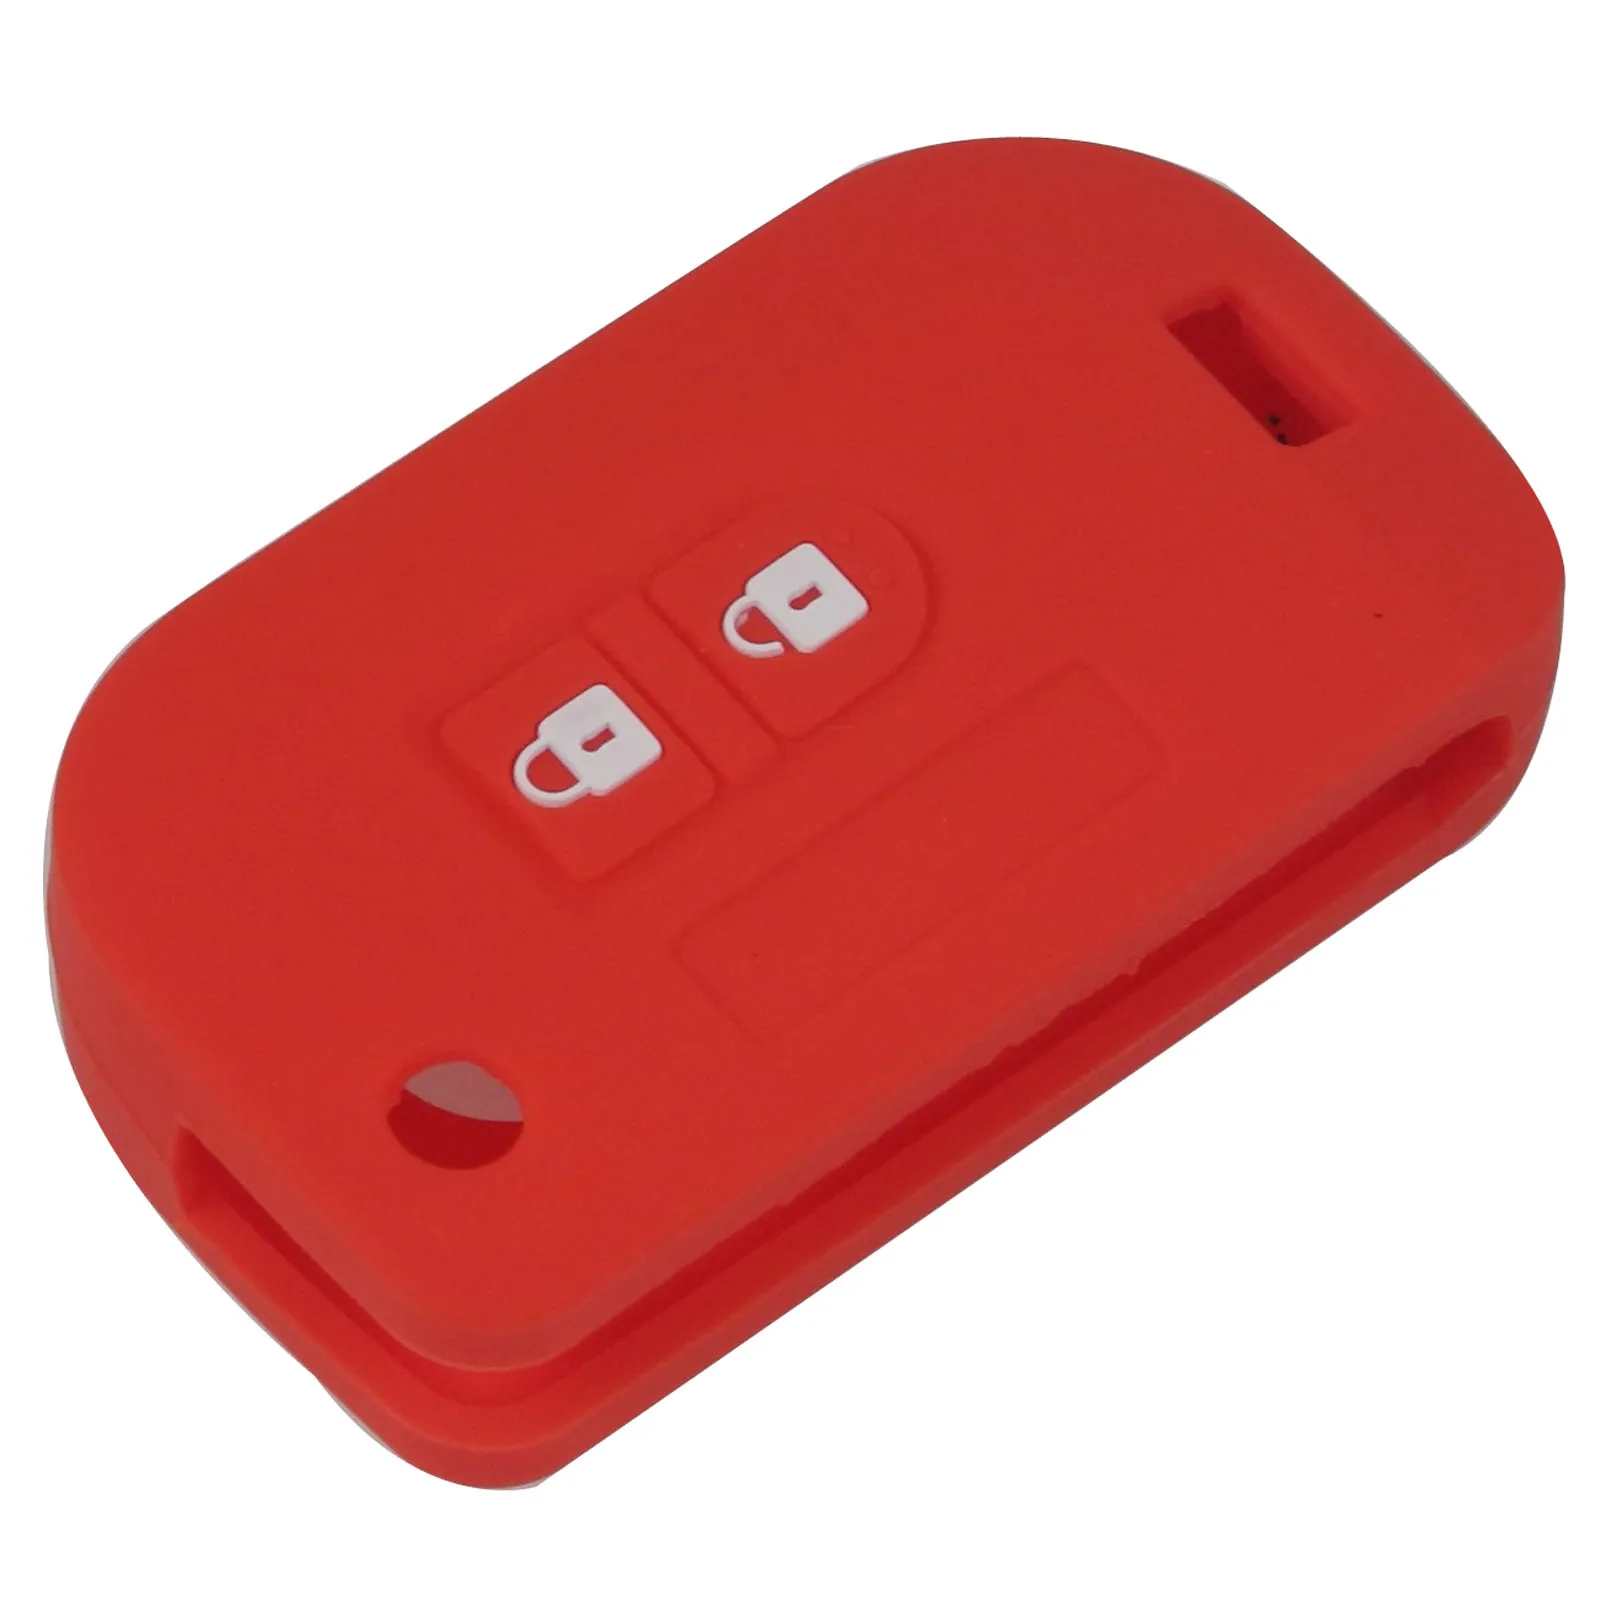 Jingyuqin силиконовый флип-чехол для ключей для Nissan Qashqai primera Micra Navara Almera Note Sunny Modified Foling Car Key Cover - Название цвета: Красный